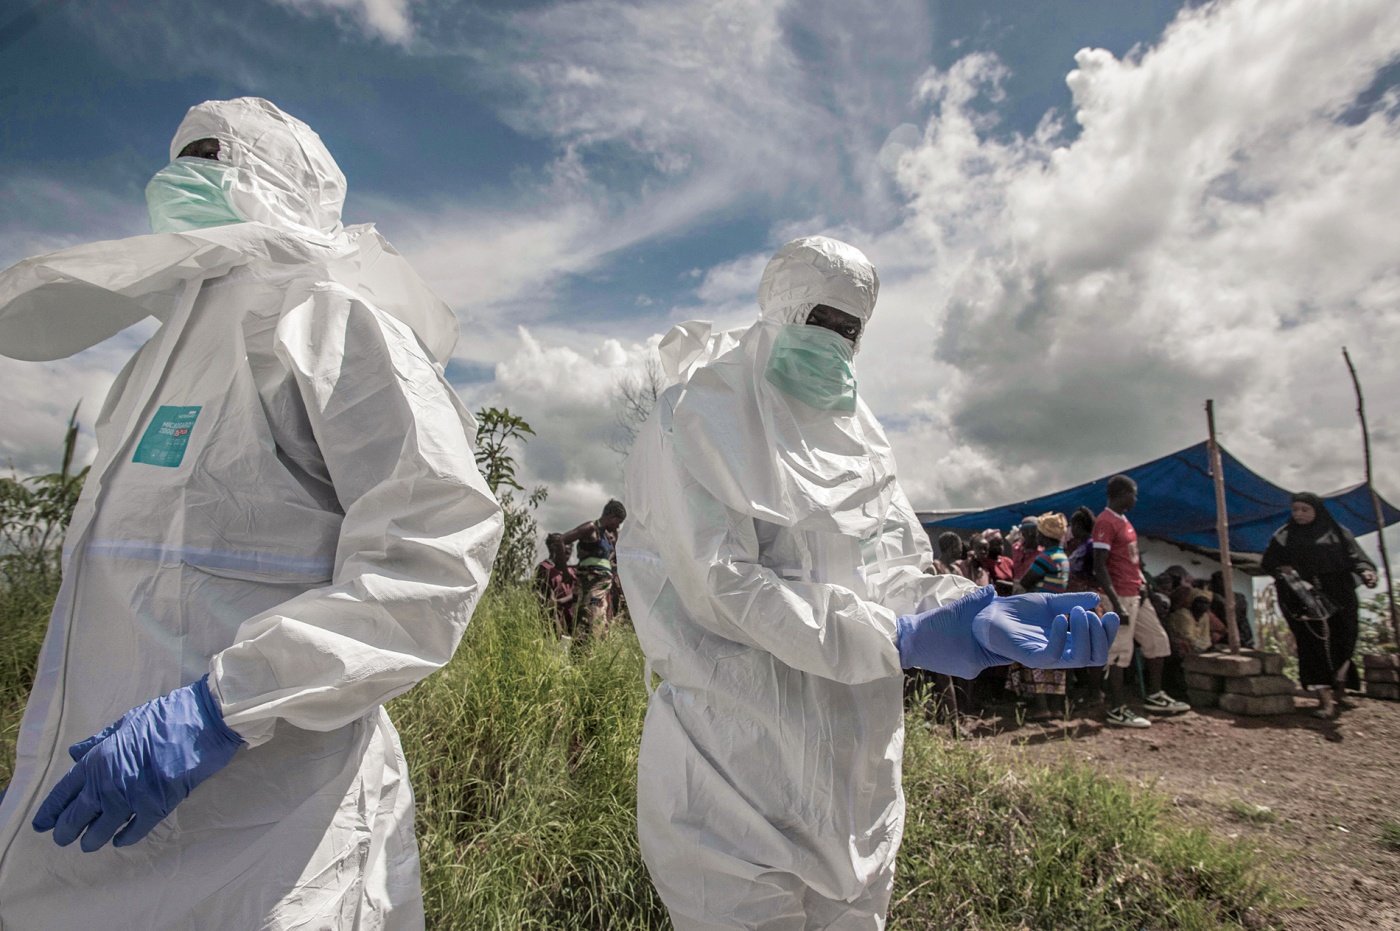 West Africa's 2014 Ebola crisis